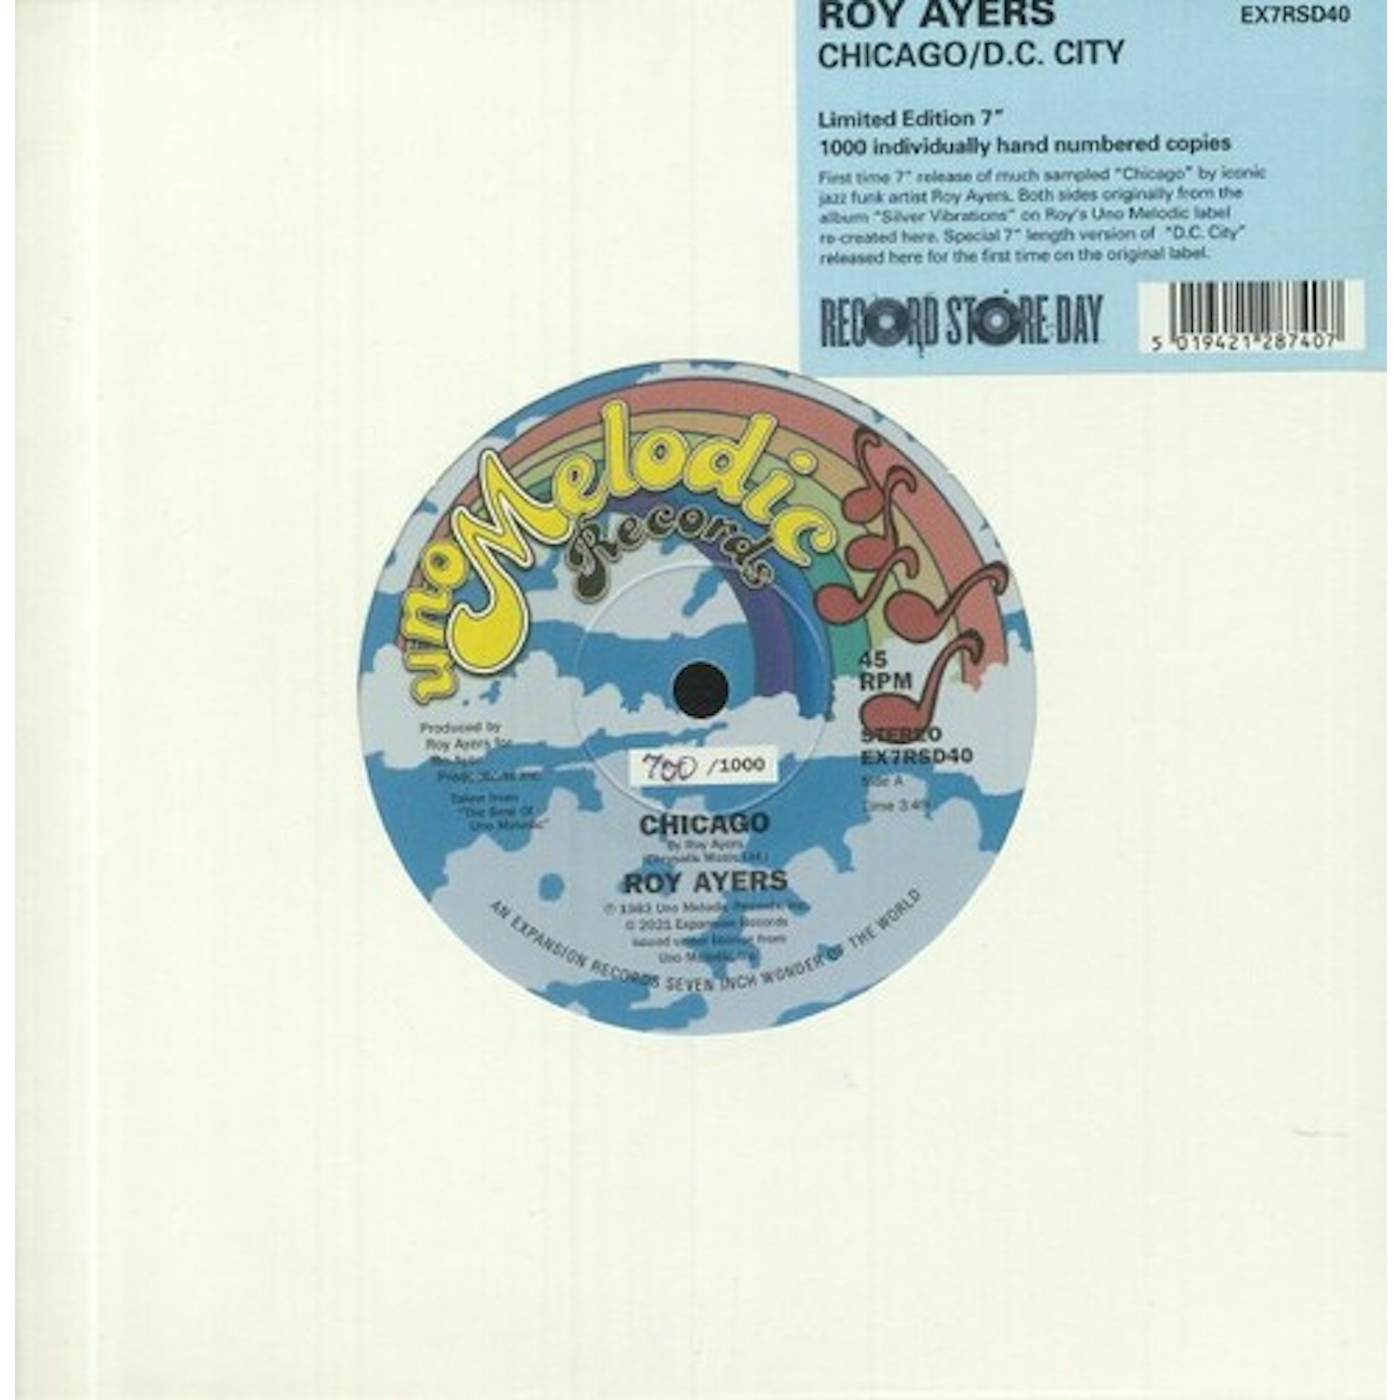 Roy Ayers CHICAGO / D.C. CITY Vinyl Record